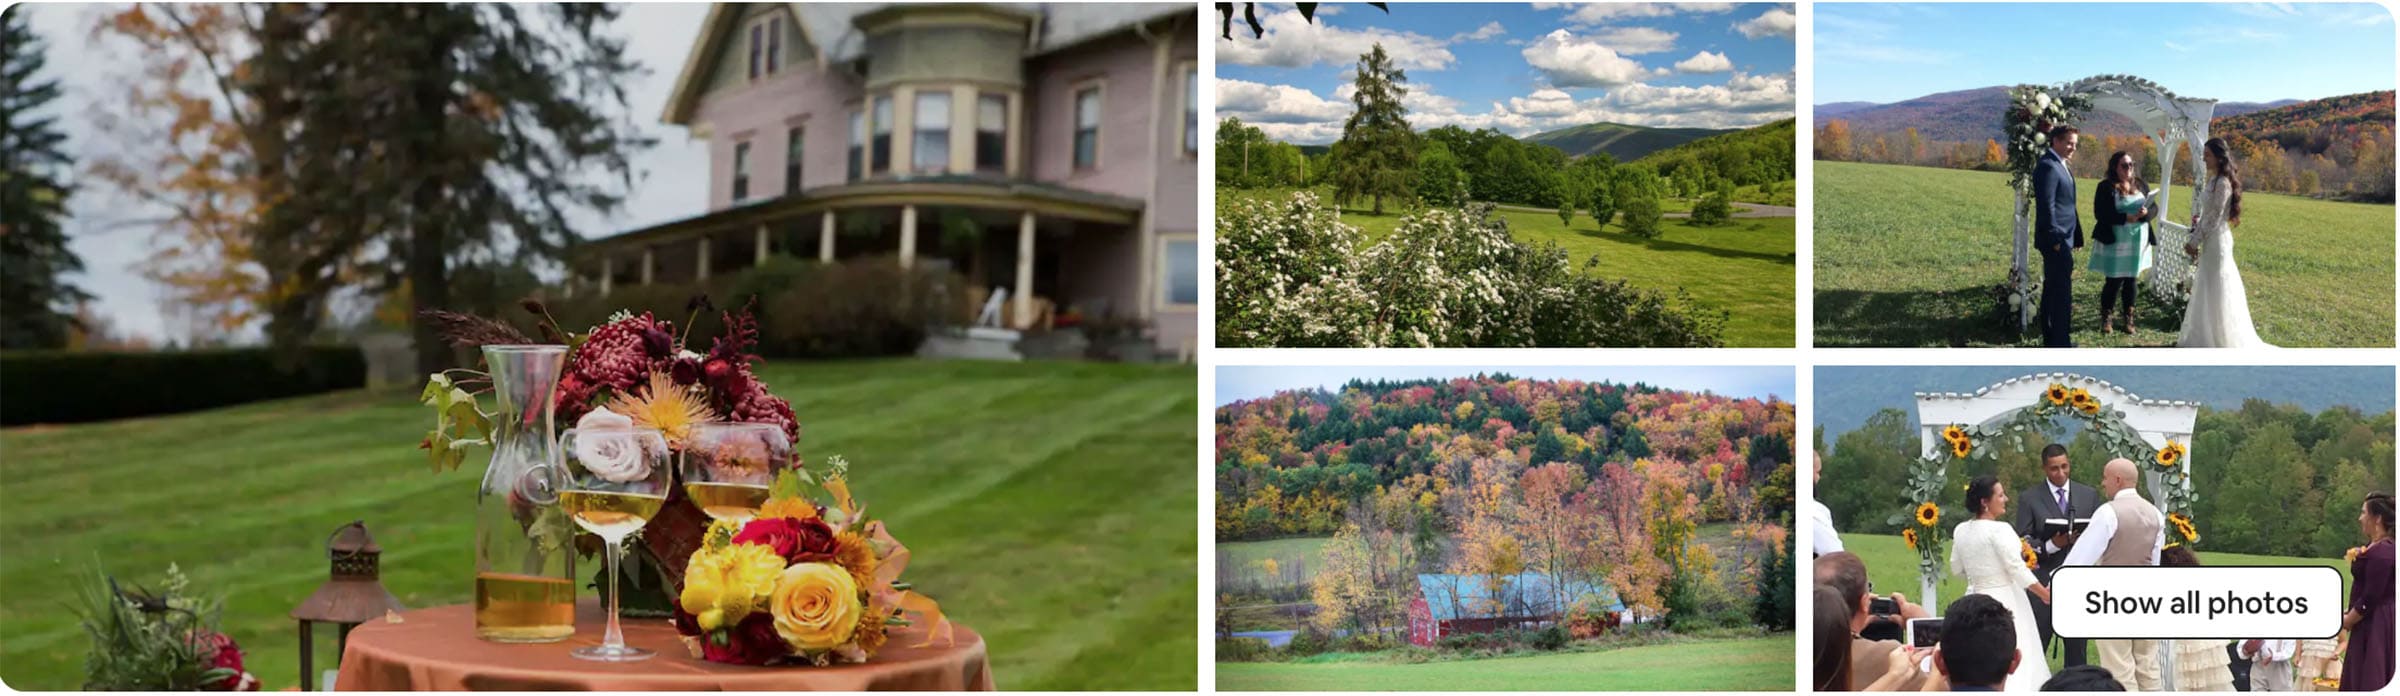 best airbnb wedding venue in Catskills